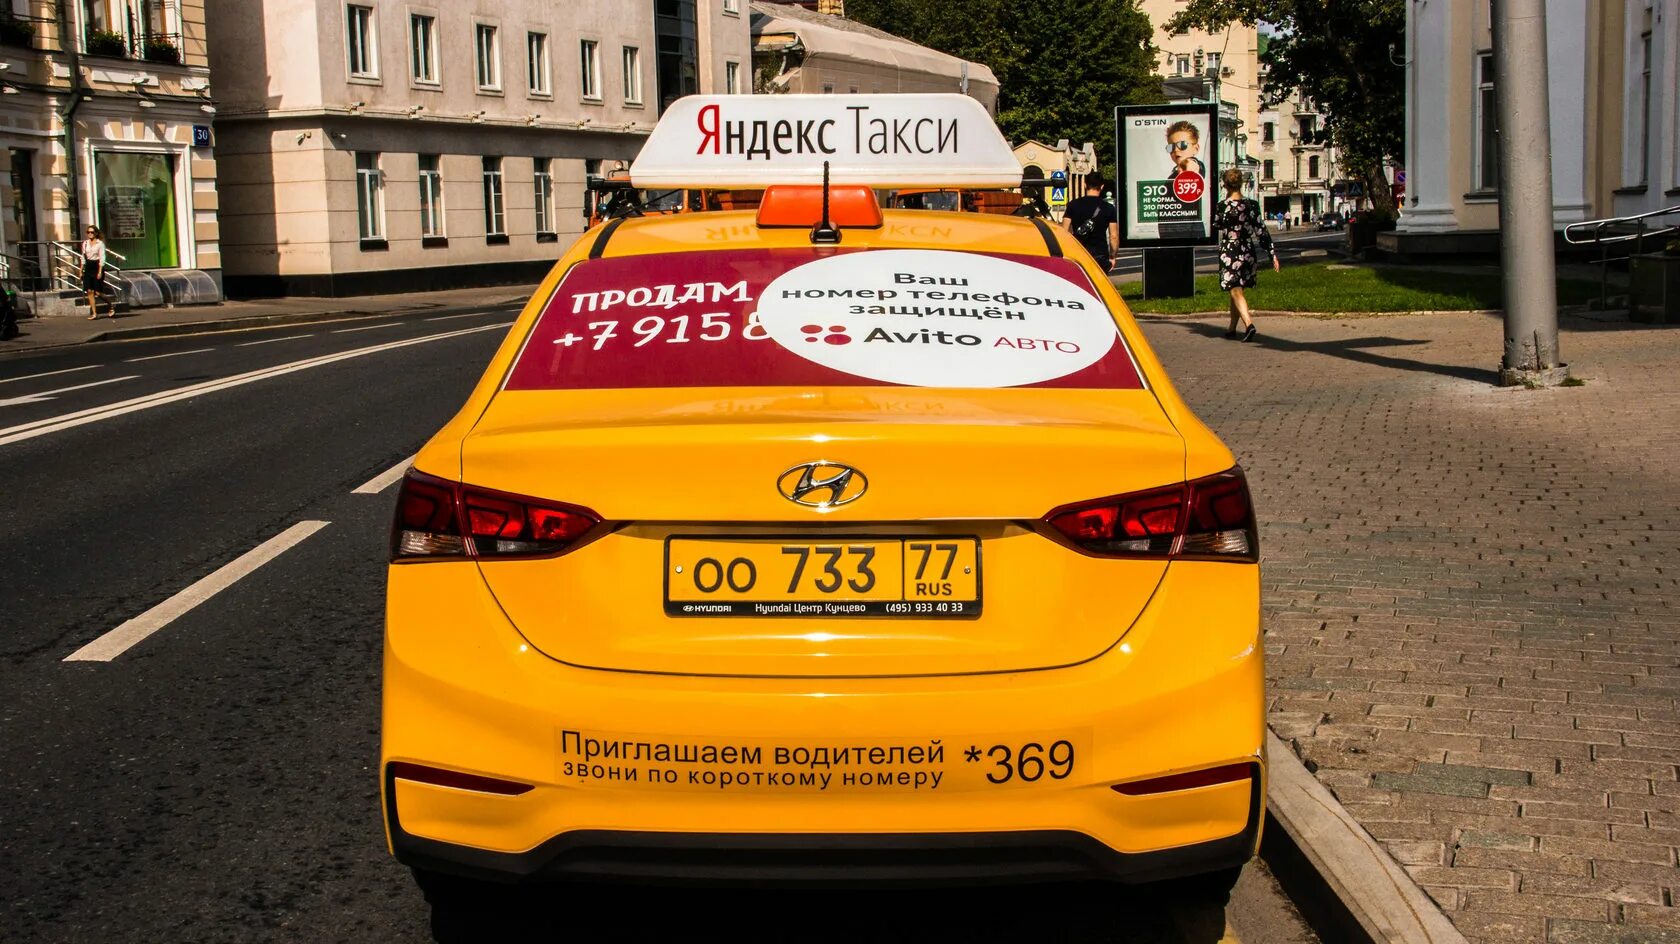 Такси москва киевская. Такси. Реклама такси.